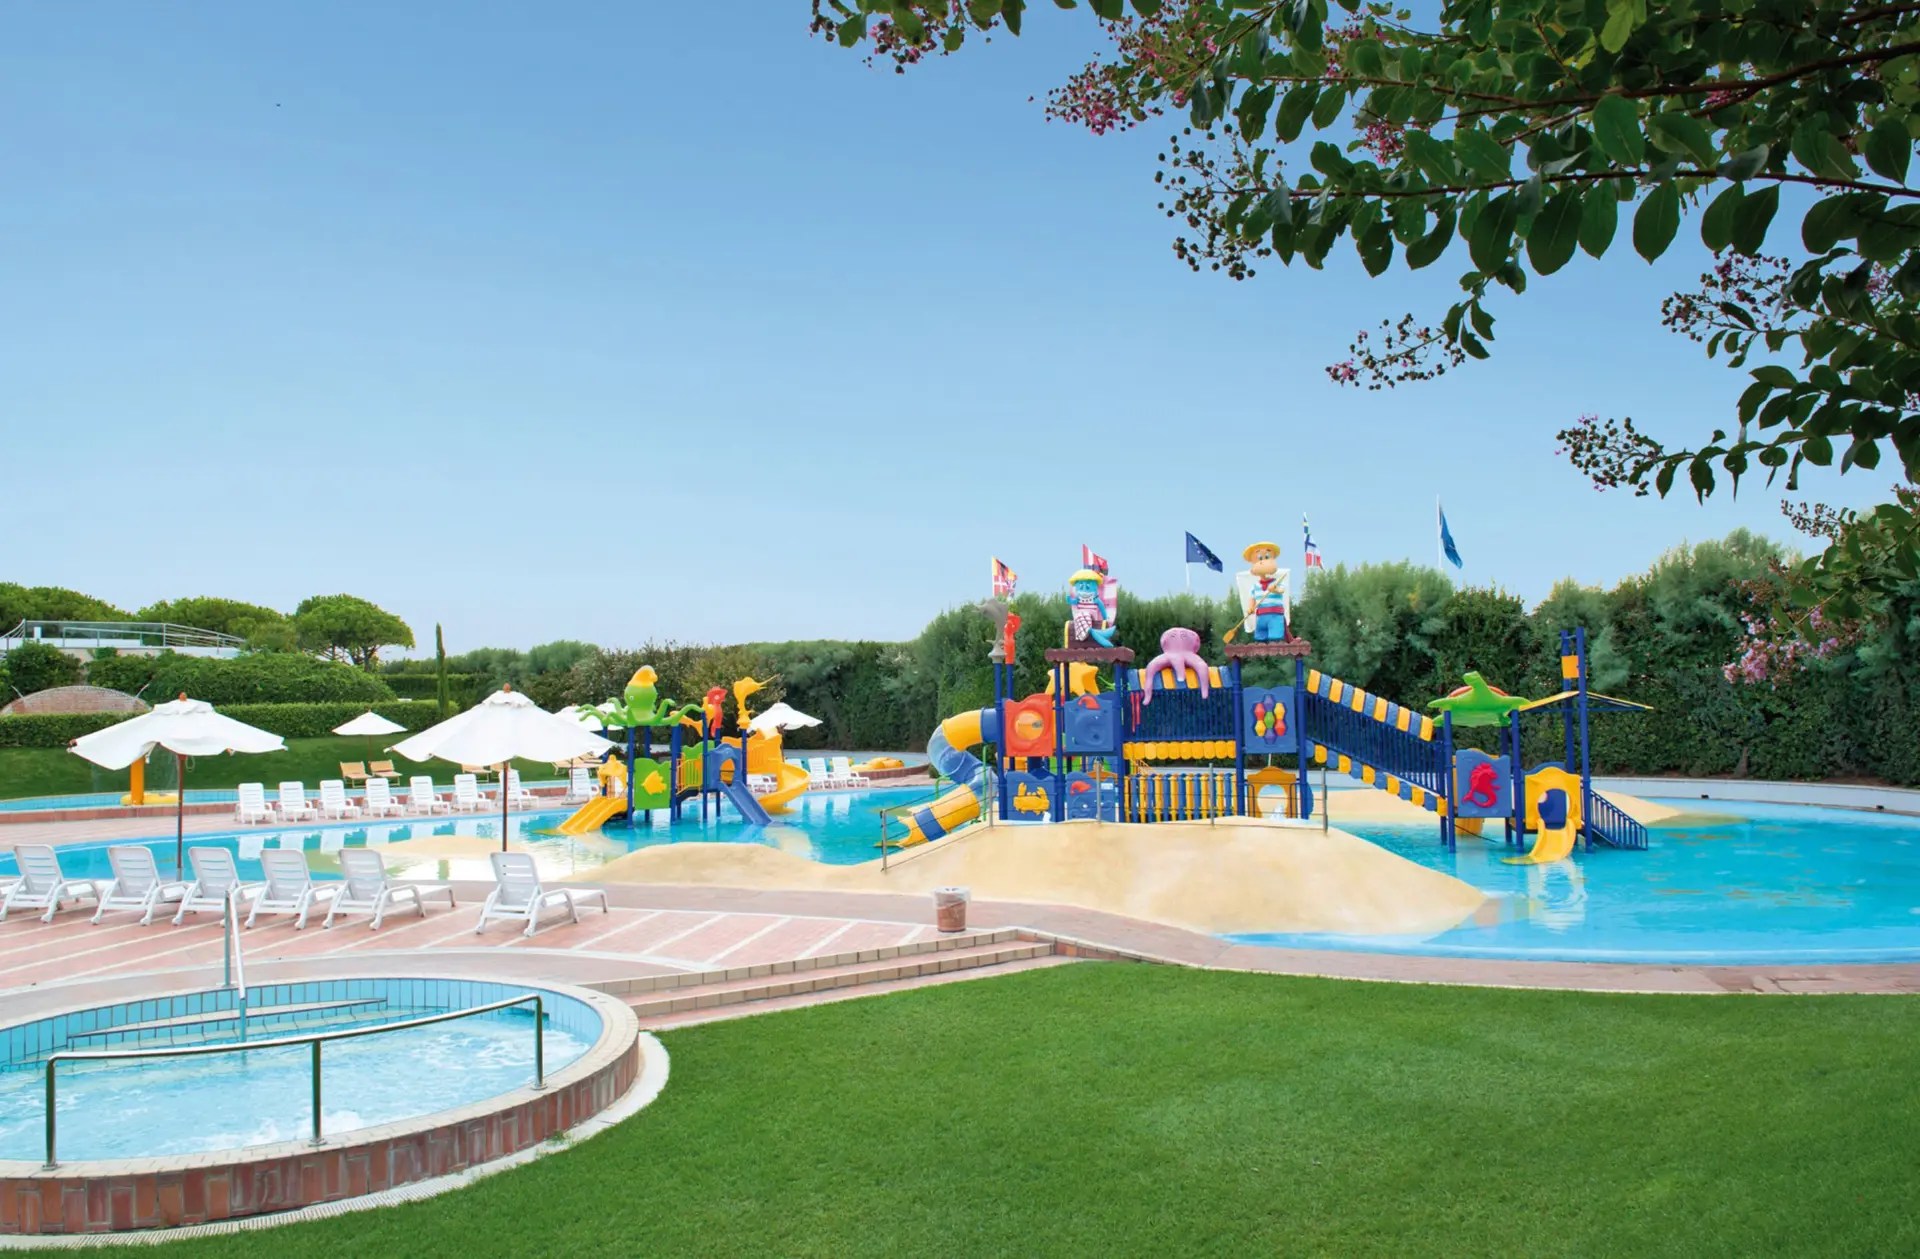 Union Lido - water castle playground